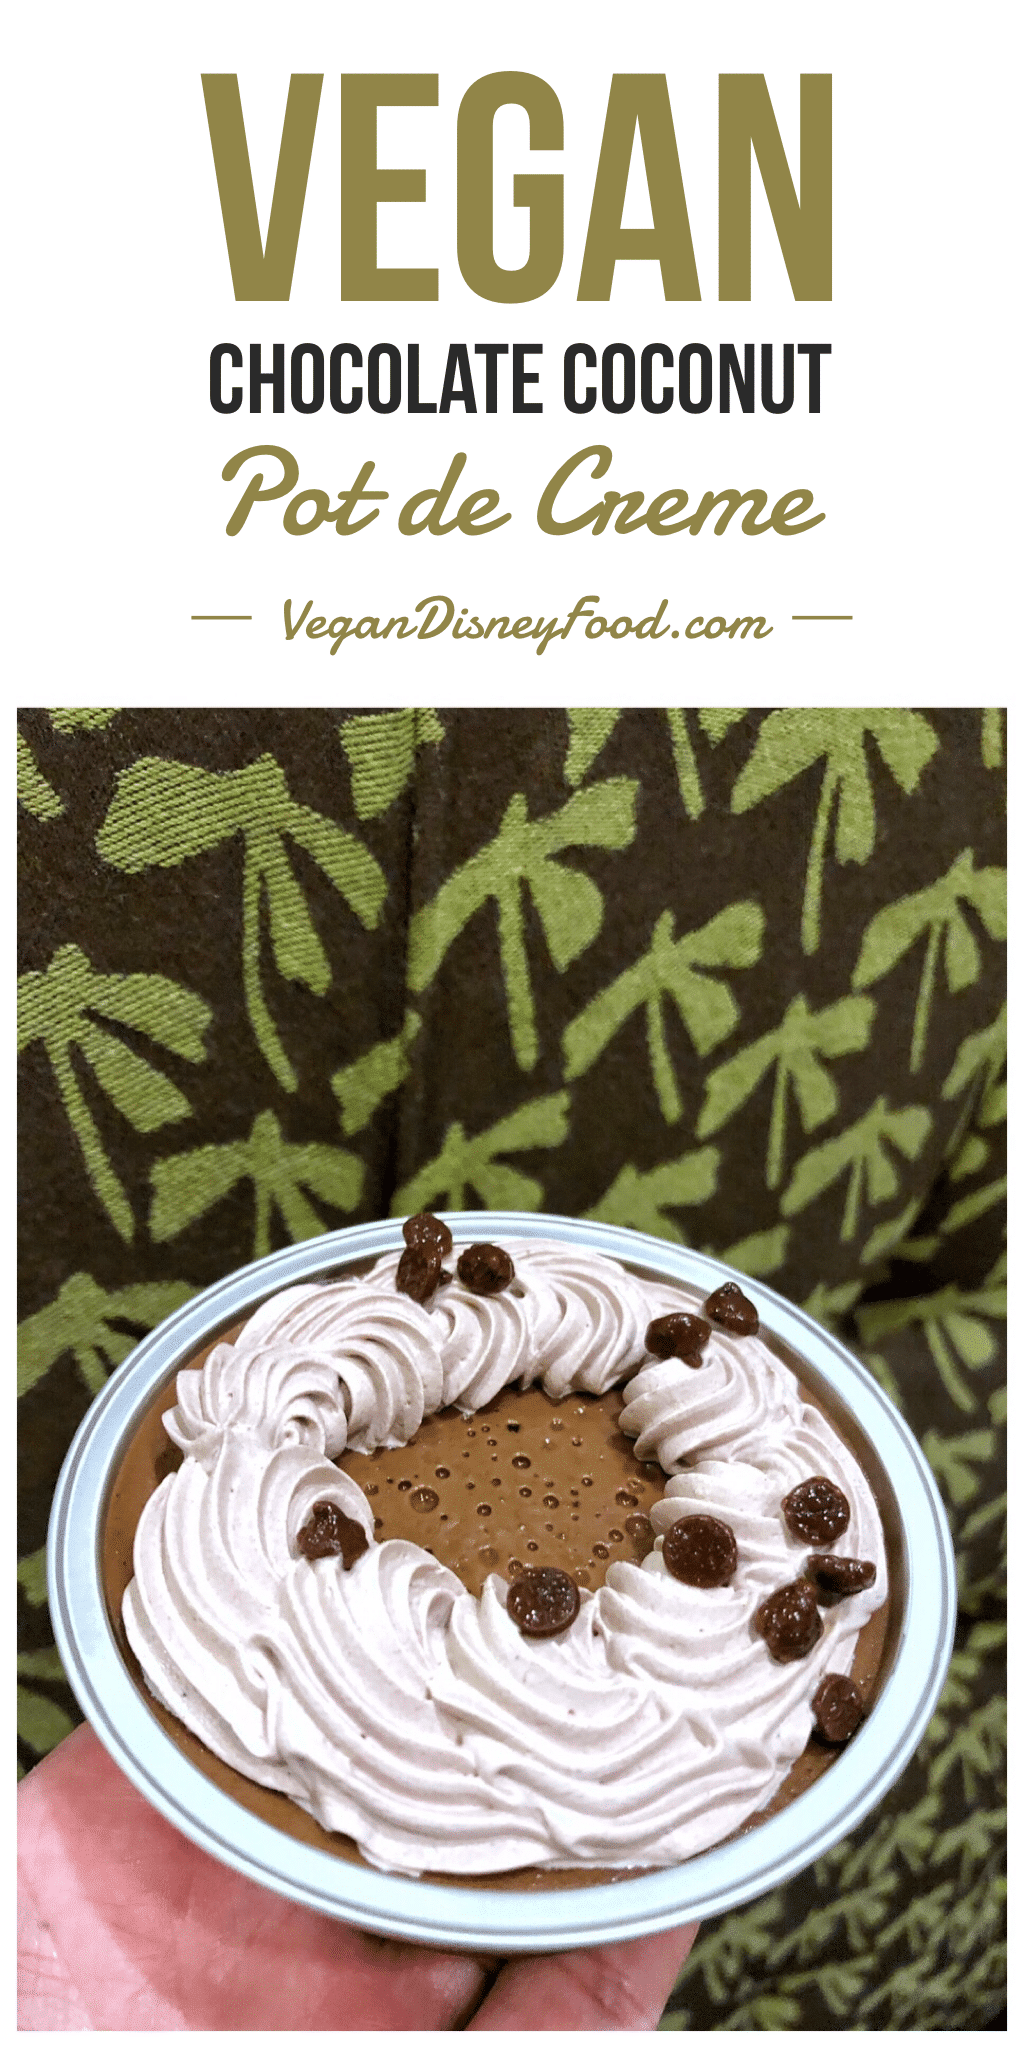 Vegan Chocolate Coconut Pot de Creme Dessert at Disney’s Grand Floridian Resort